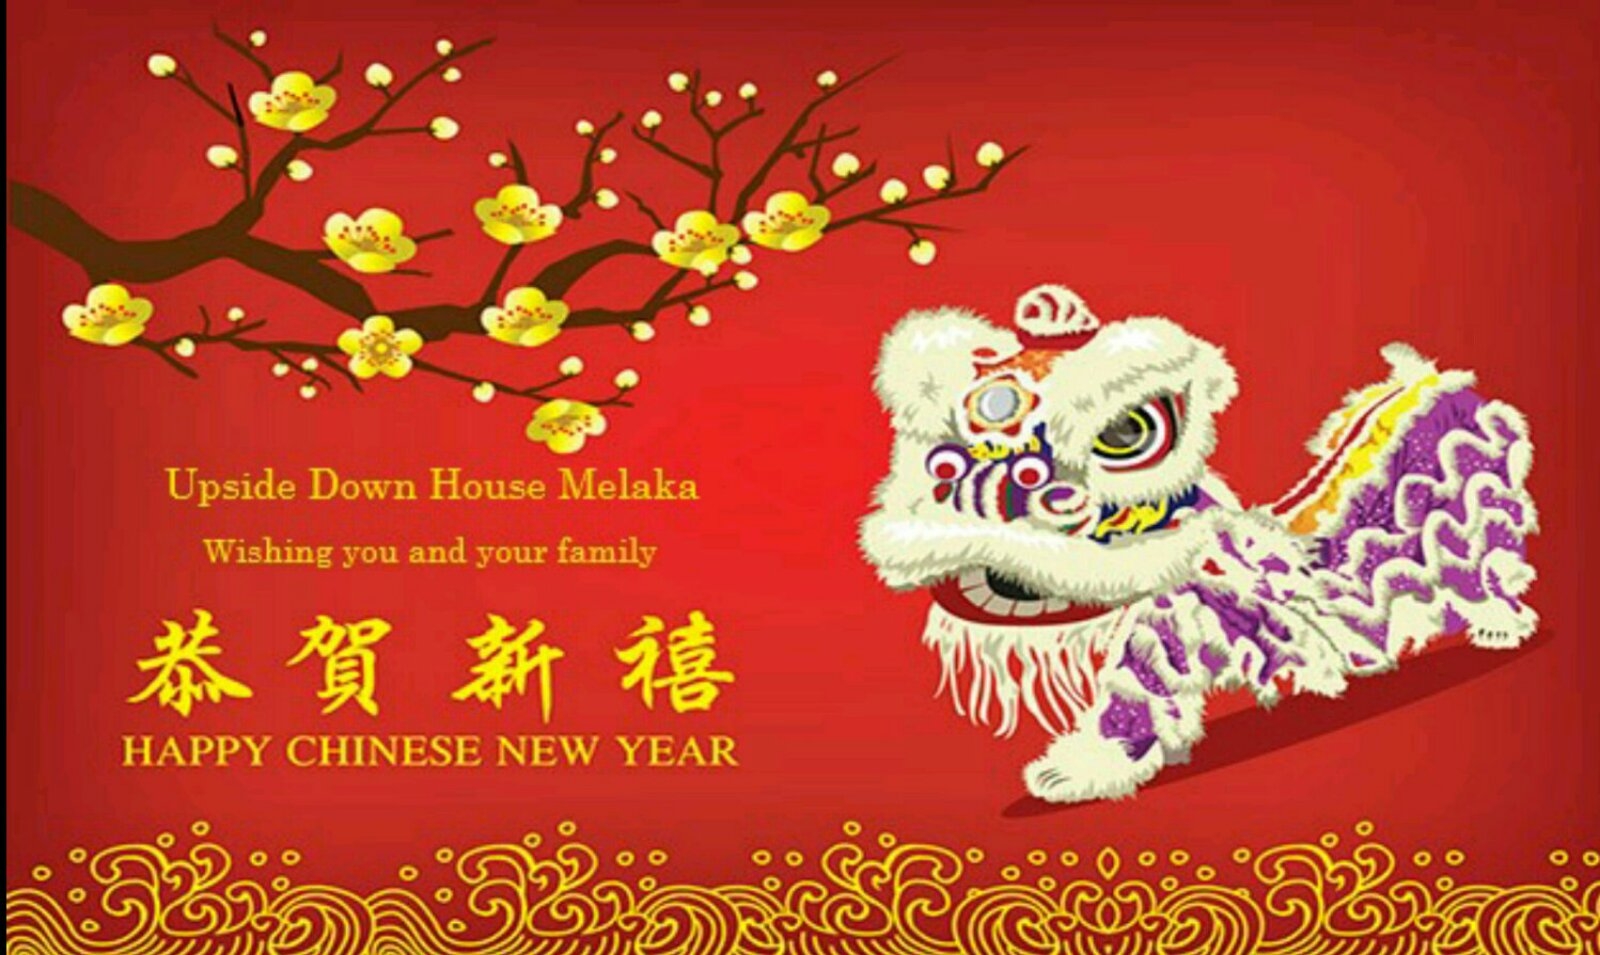 Selamat Tahun Baru Cina 2019. Kami buka pada Tahun Baru Cina 5/2 